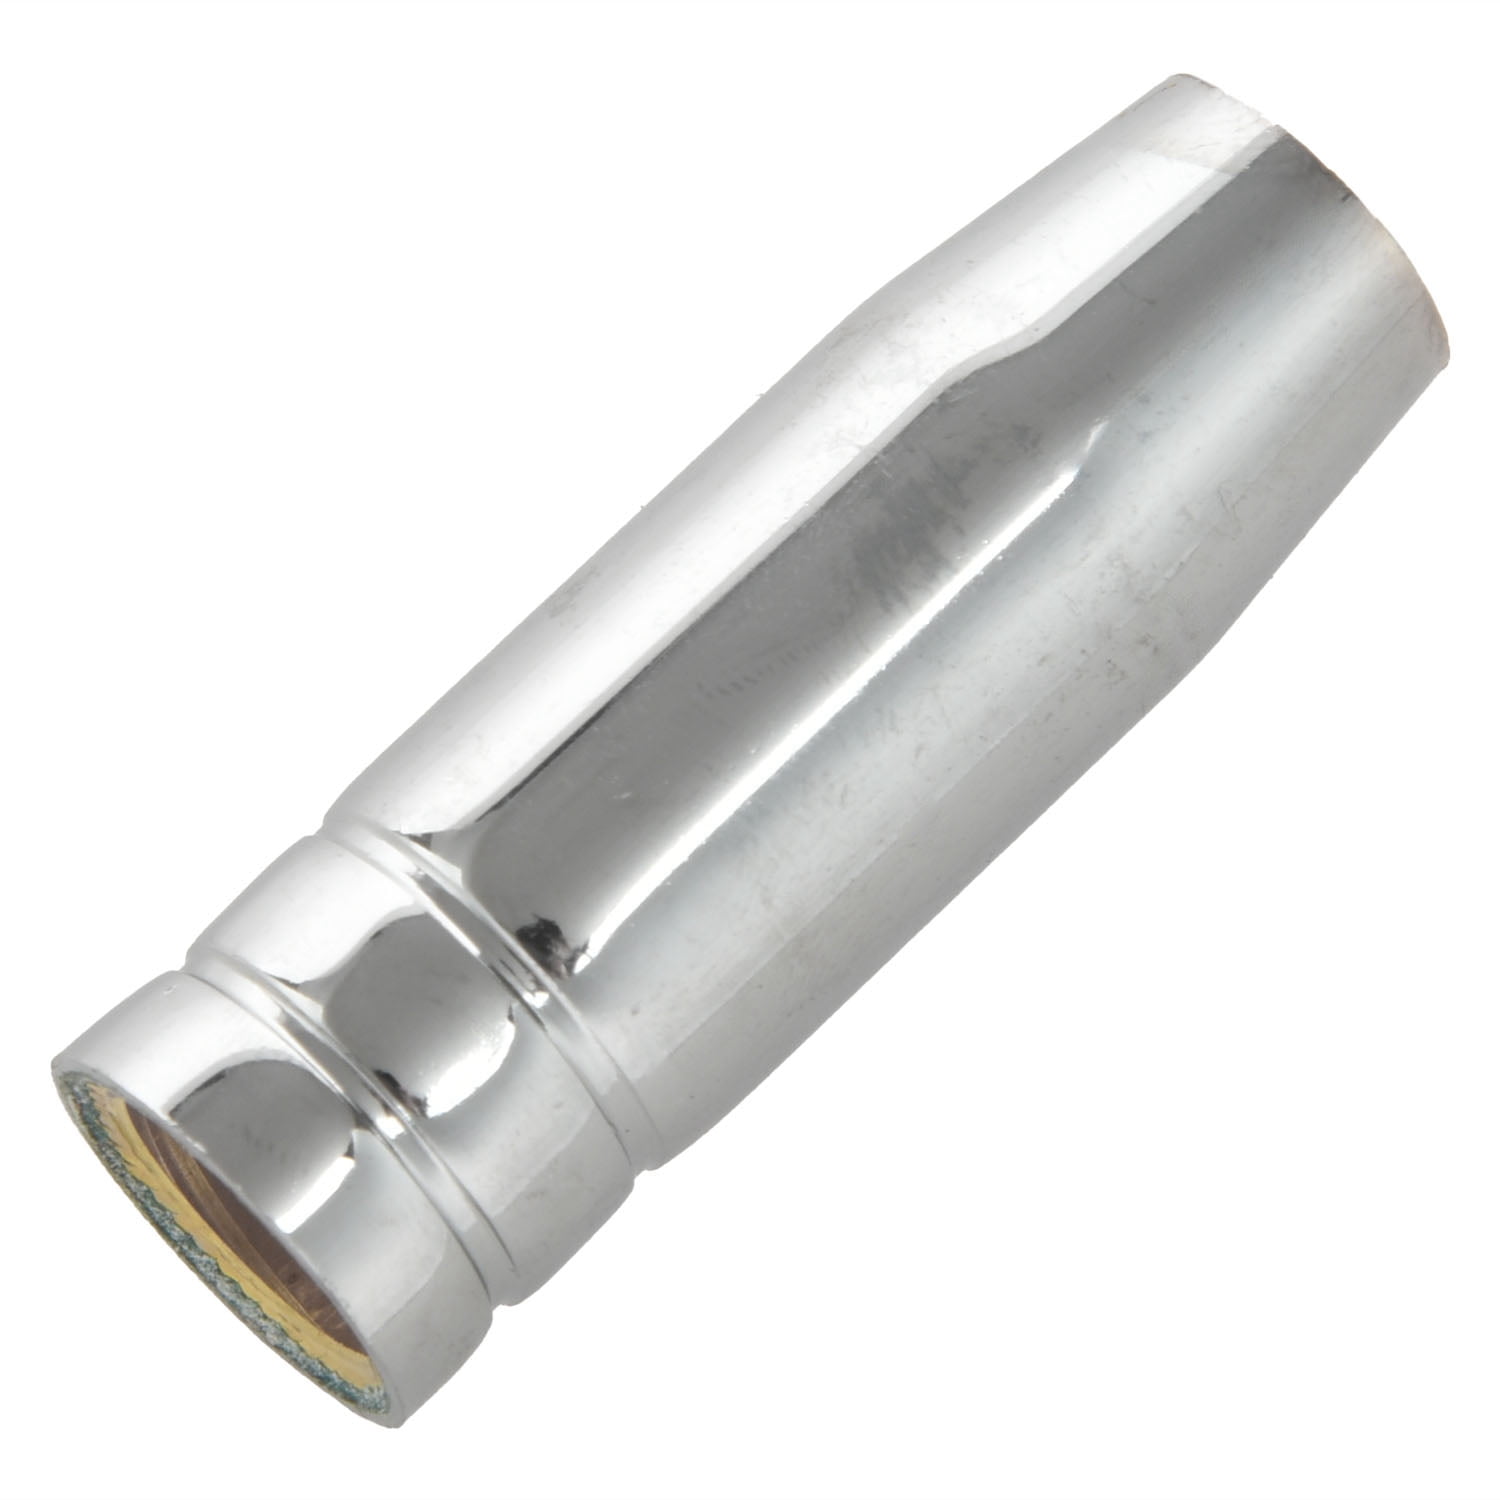 11pcs Durable MIG Welding Welder Torch Nozzles Tip Holder Contact Tips 0.040 Gas Diffuser Set 